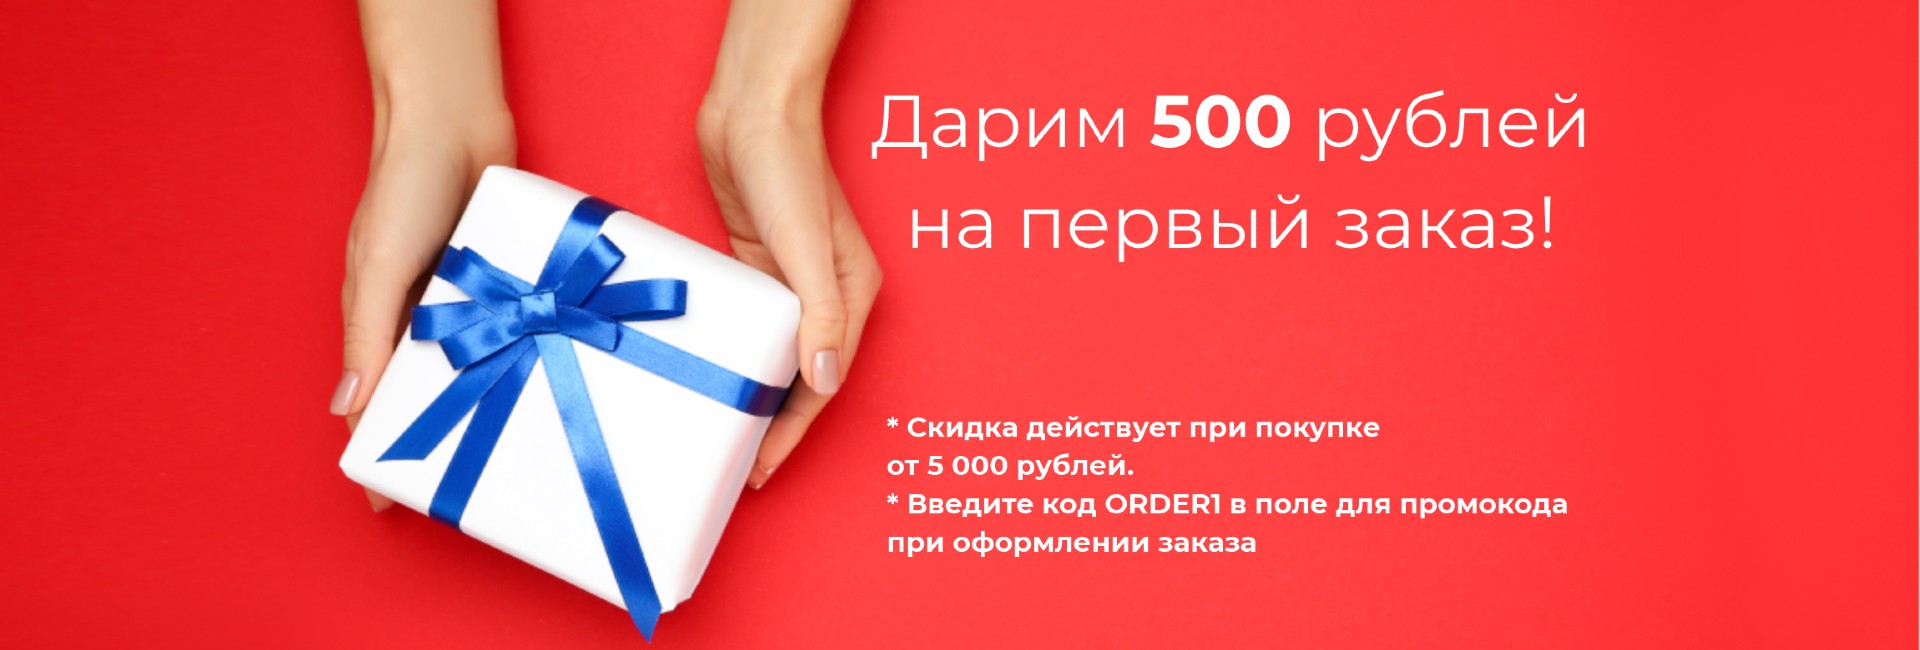 Дарим 500 рублей на первый заказ